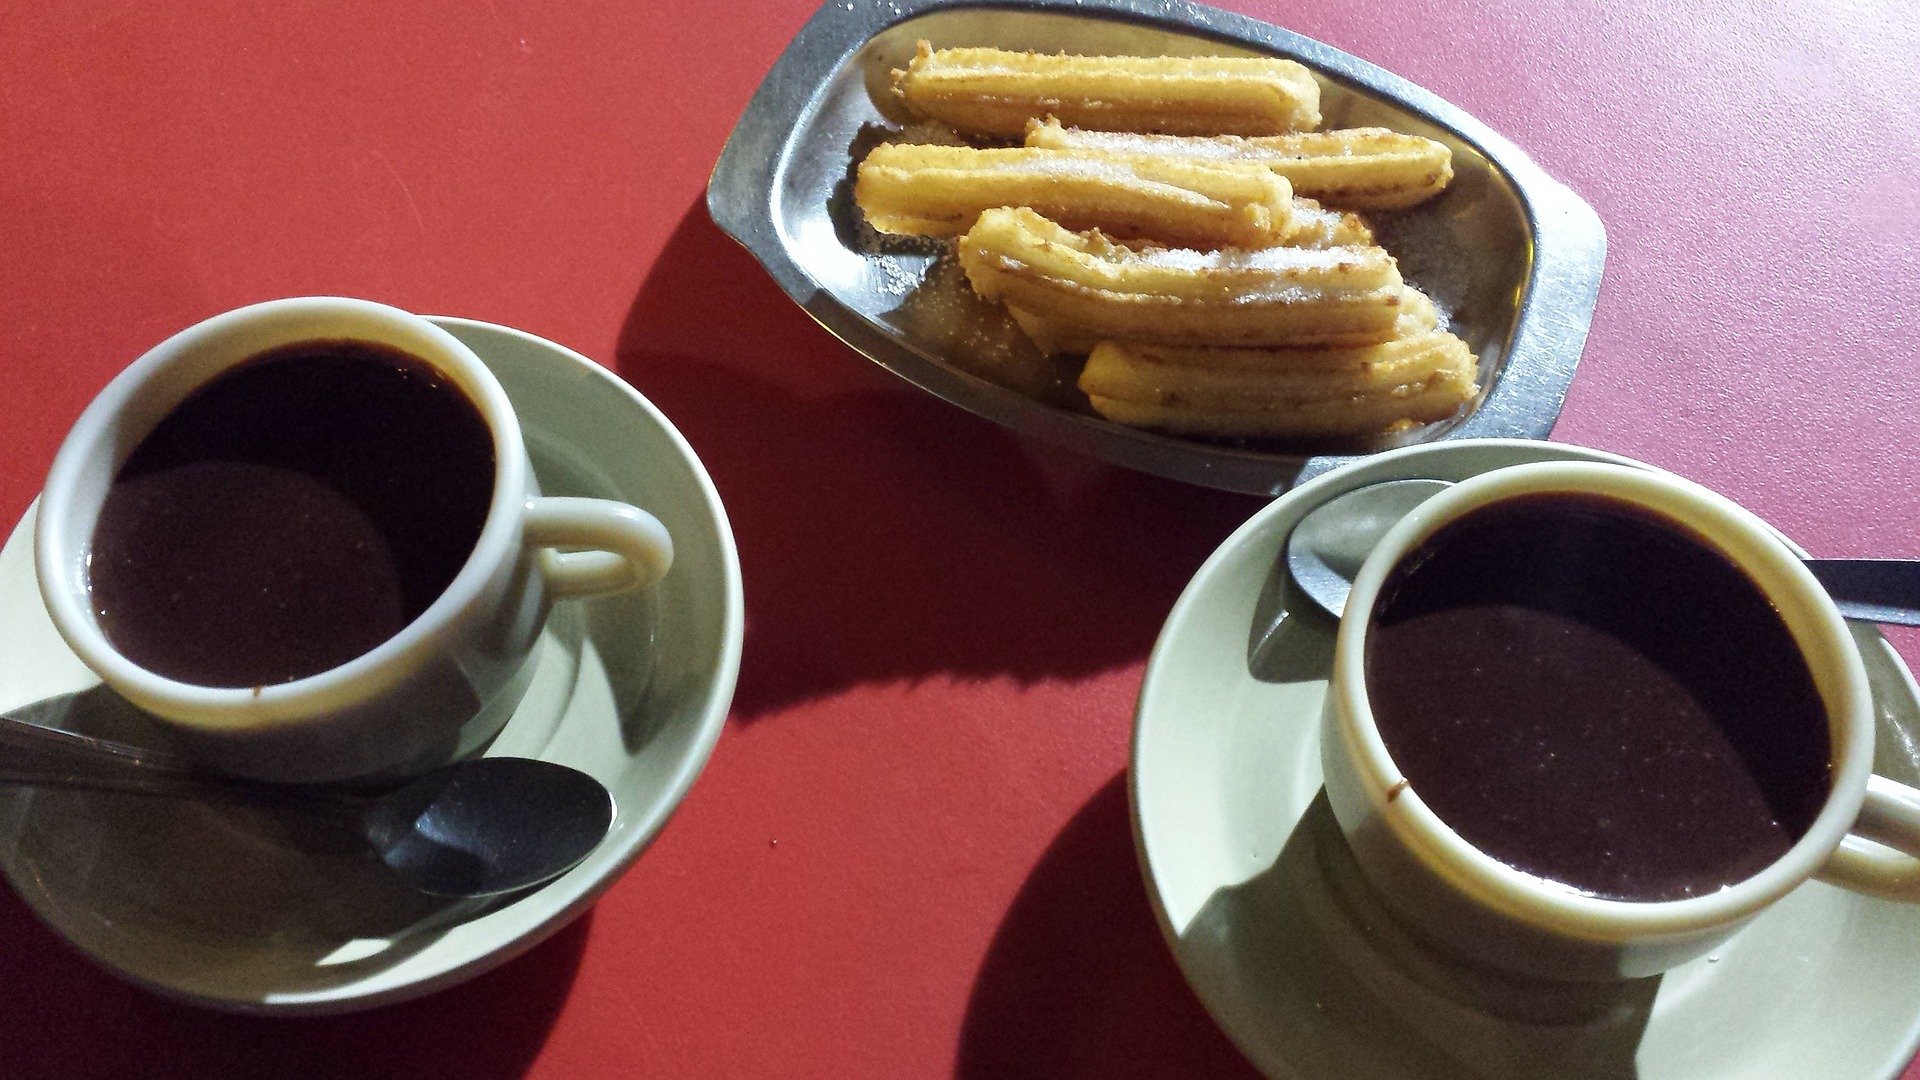 memberi tip di churros spanyol suatu hari di Malaga menghabiskan 2 hari di madrid mengunjungi madrid sendirian churros con chocolate